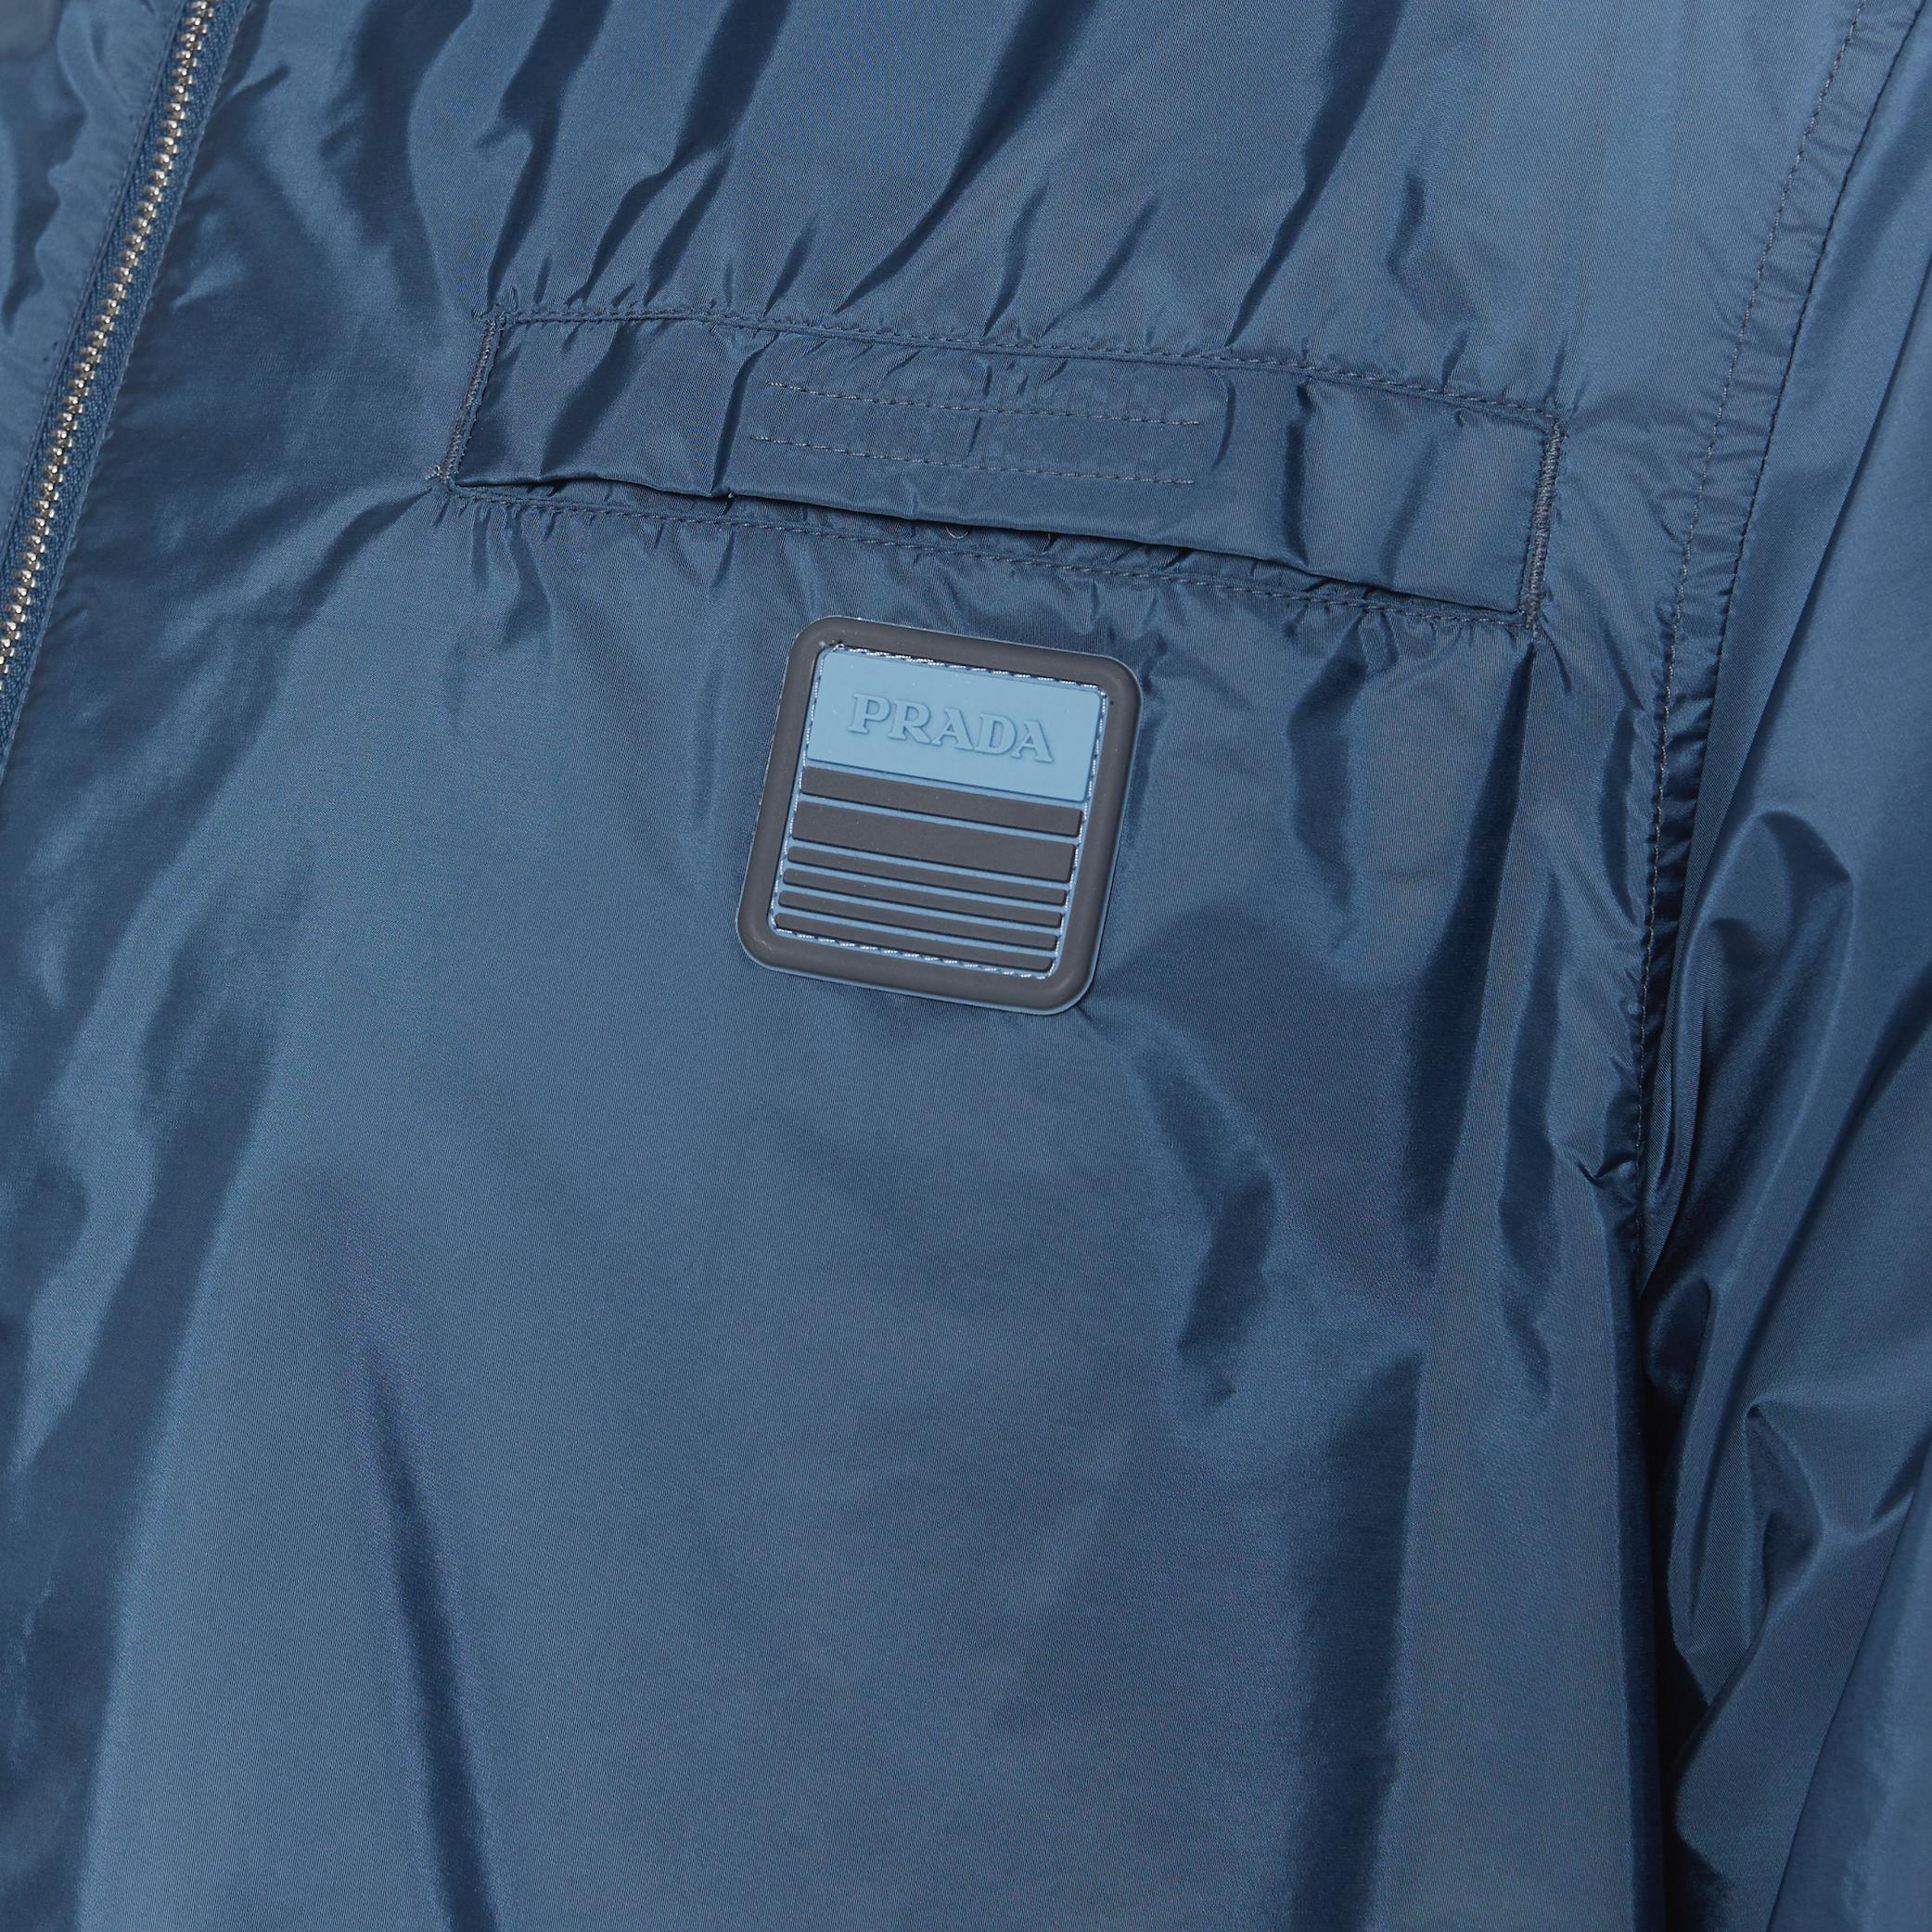 new PRADA Nylon 2018 blue sport rubber logo badge zip shirt shell jacket XL 
Reference: TGAS/A05716 
Brand: Prada 
Designer: Miuccia Prada 
Collection: 2018 
Material: Nylon 
Color: Blue 
Pattern: Solid 
Closure: Zip 
Extra Detail: Prada logo rubber